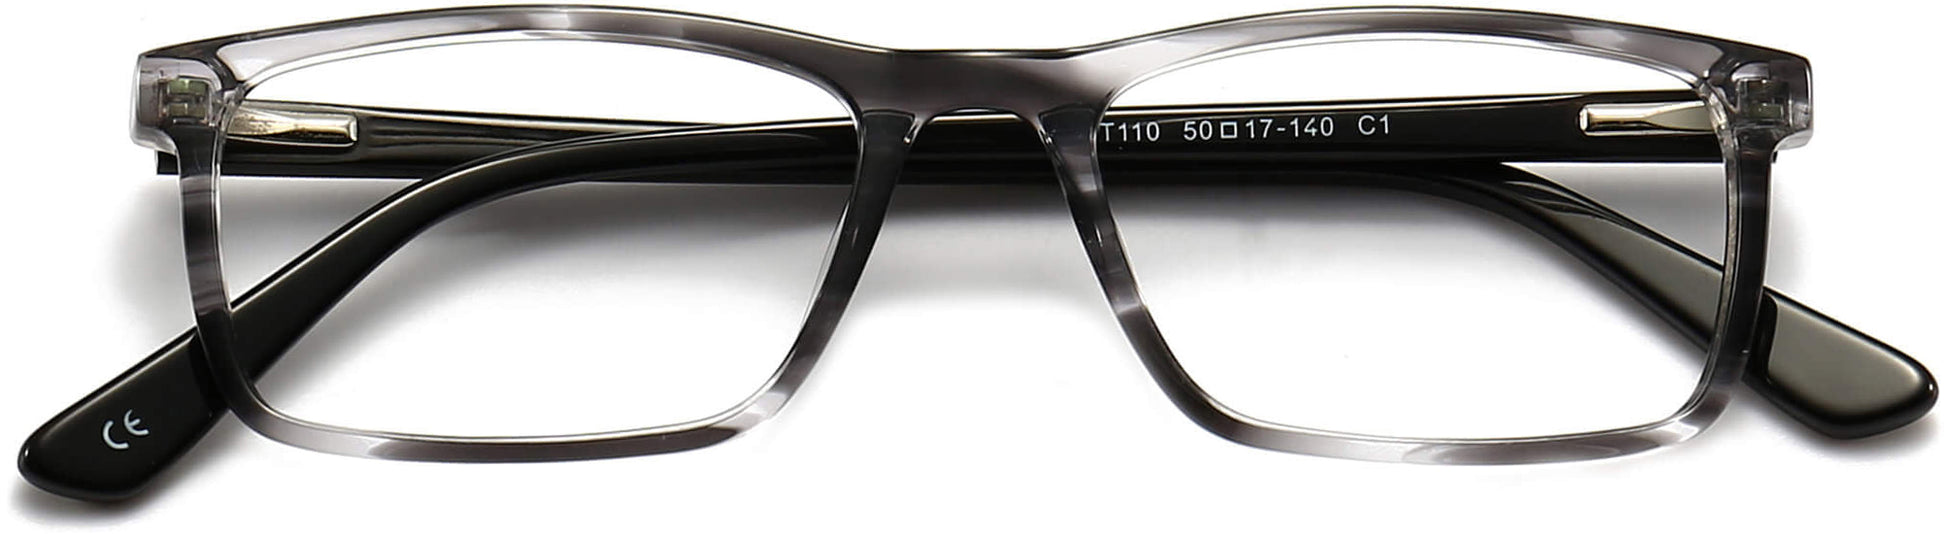 Trenton Rectangle Gray Eyeglasses from ANRRI, closed view